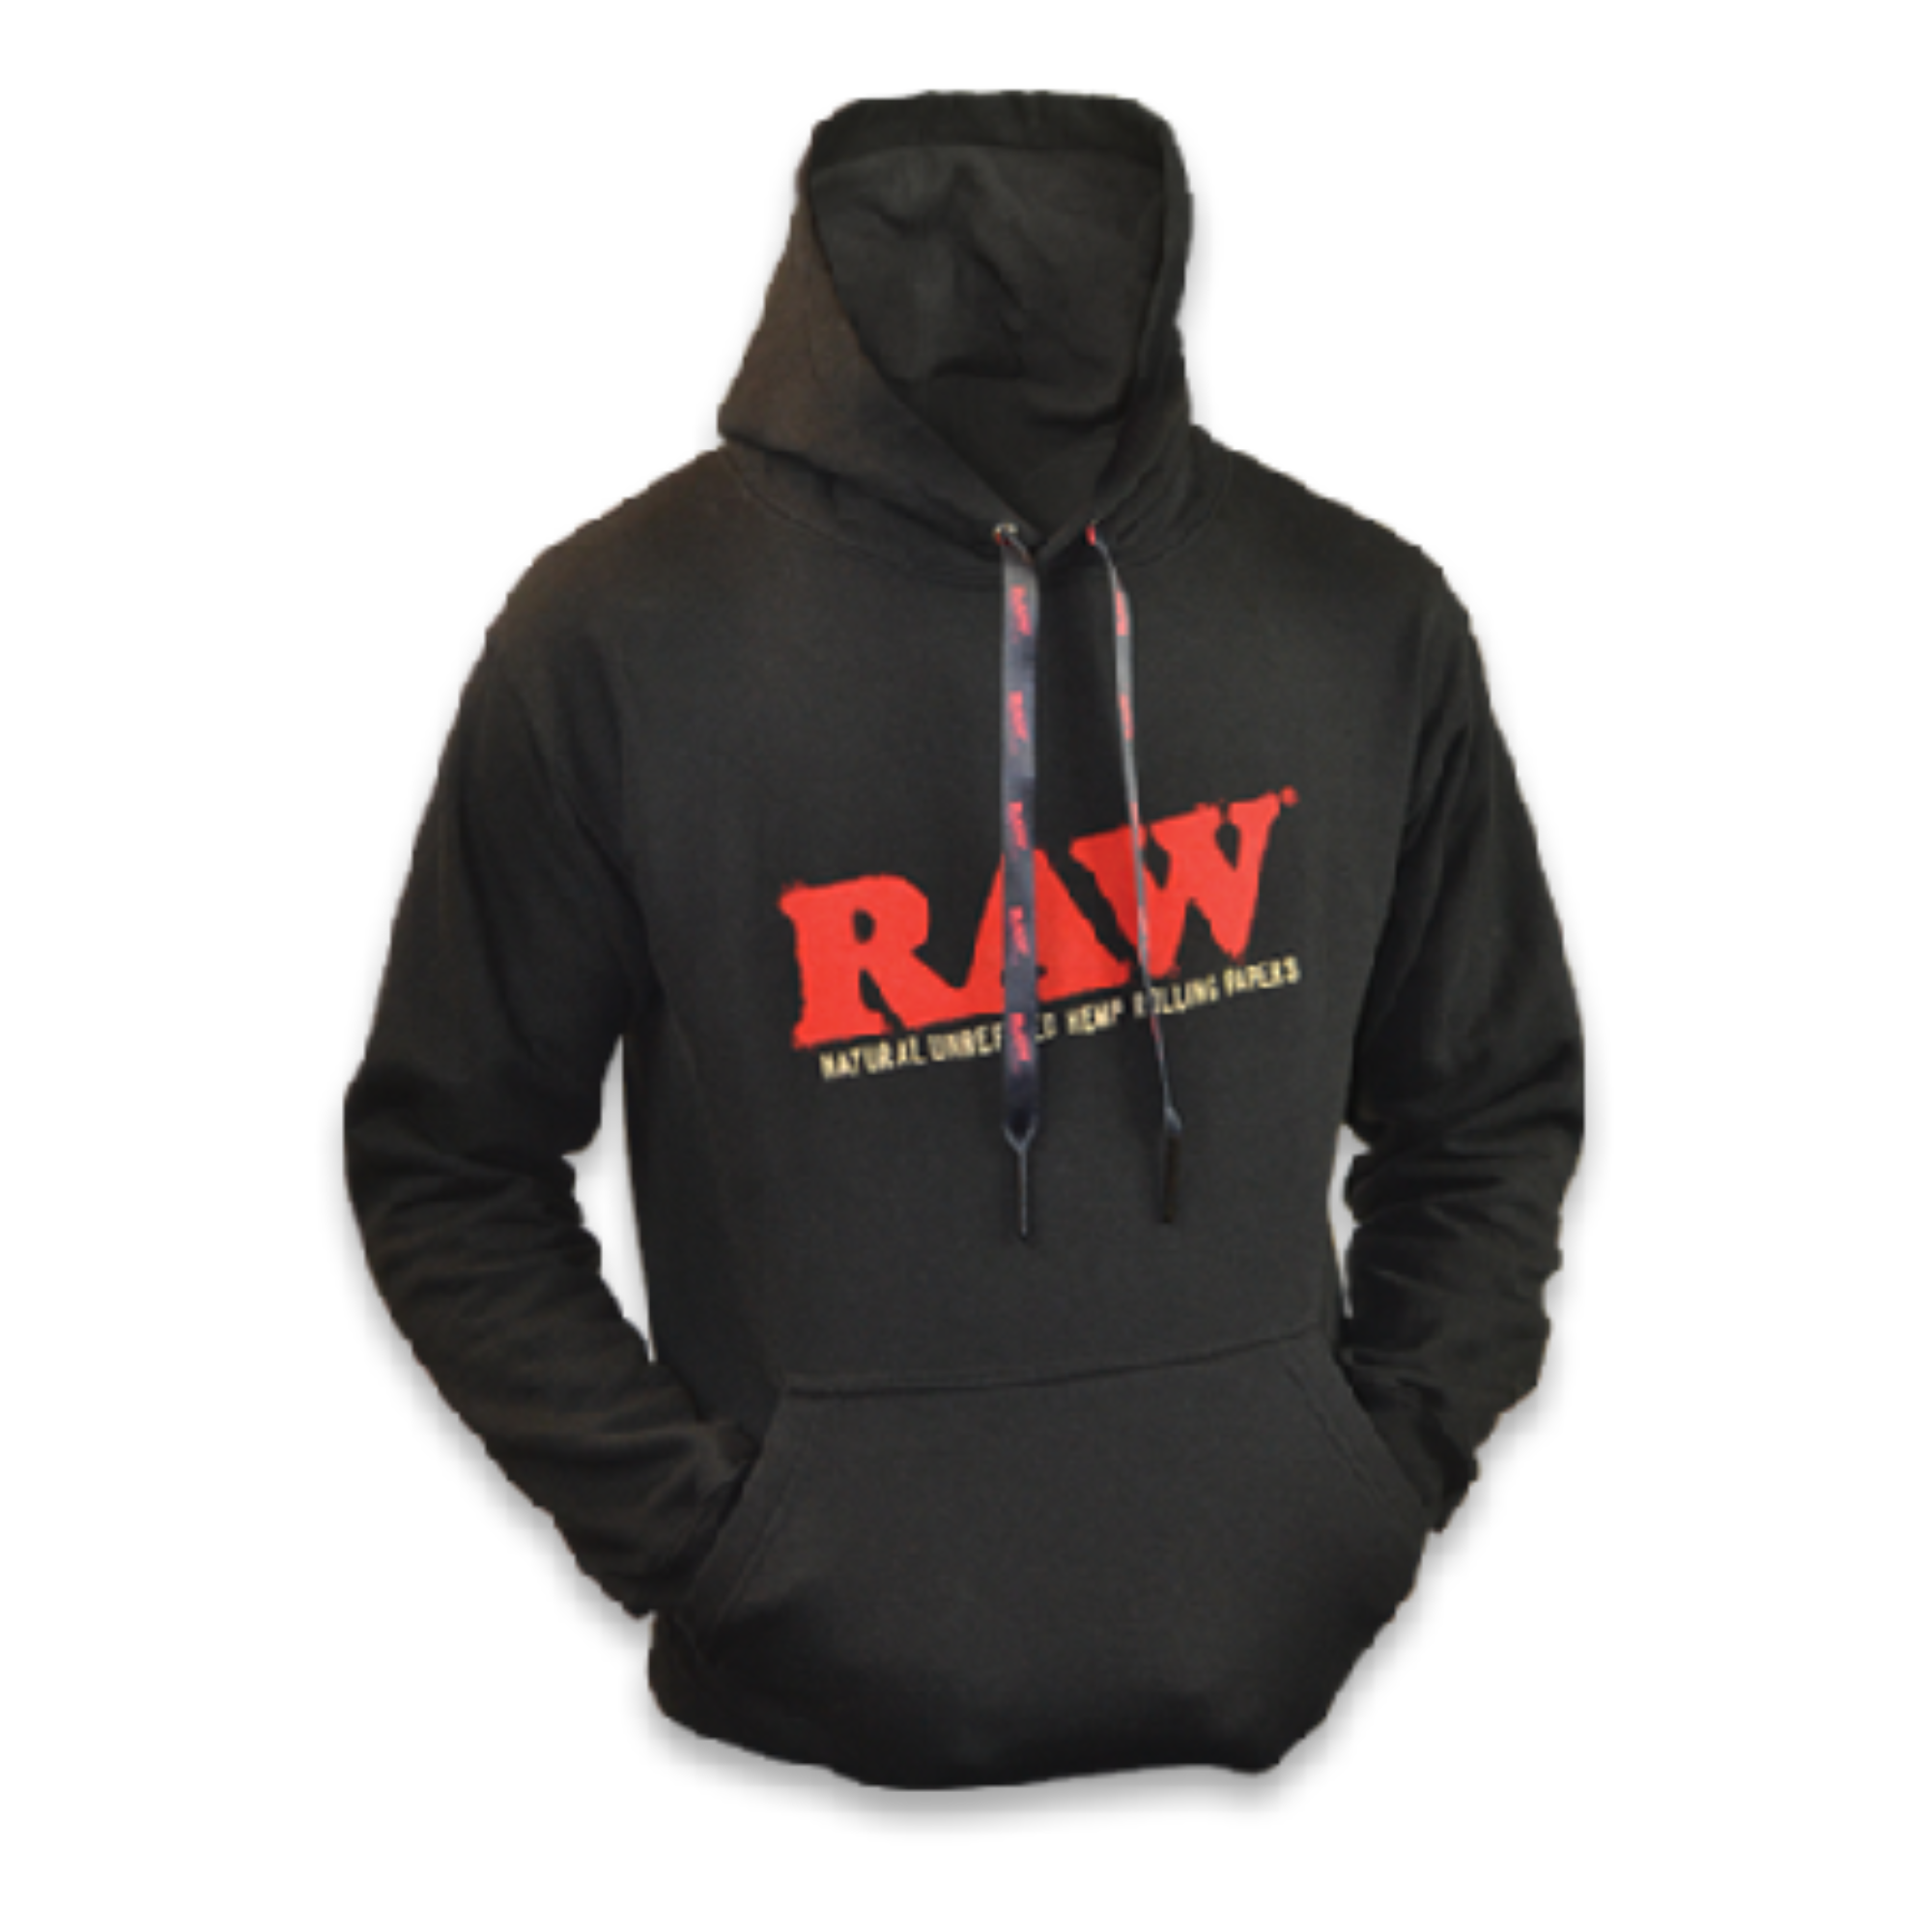 g star raw hoodie| matriarch.la